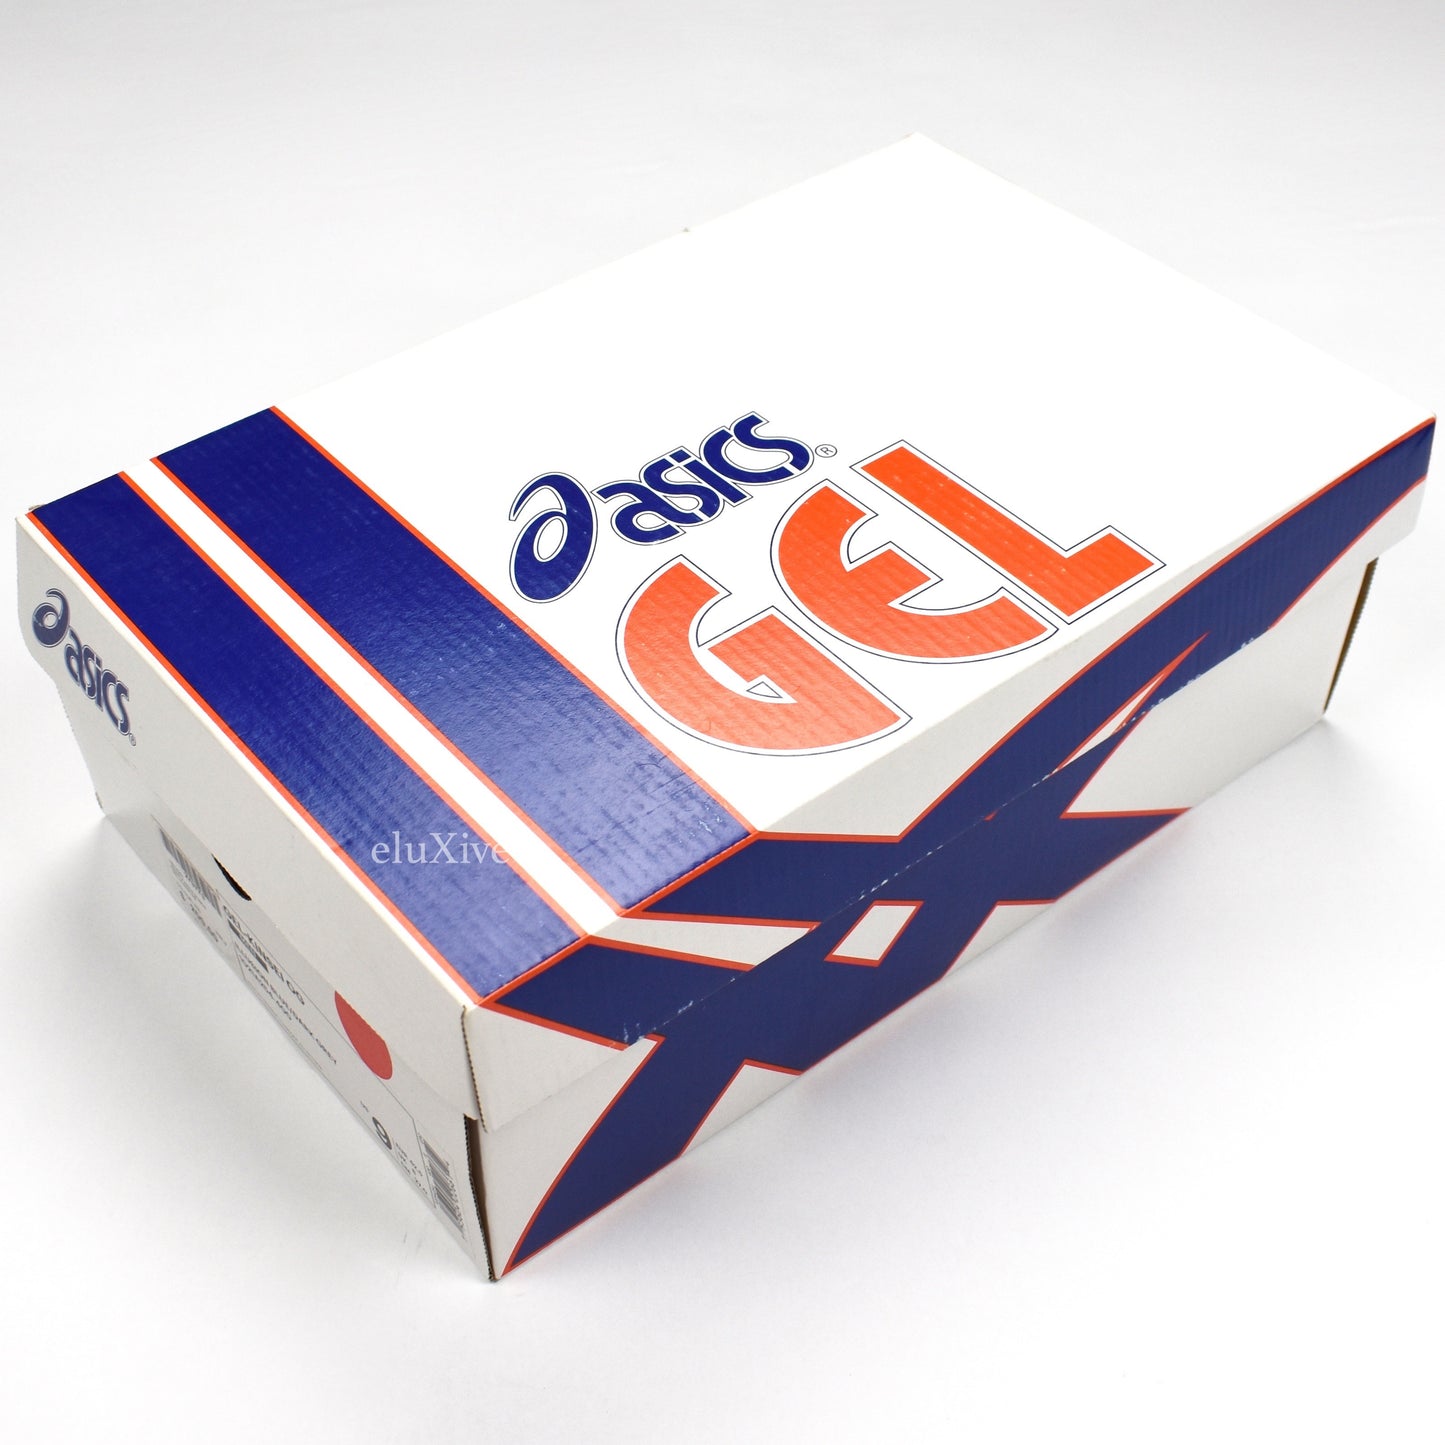 Asics x Affix - Gel Kinsei OG (Blue/Orange)